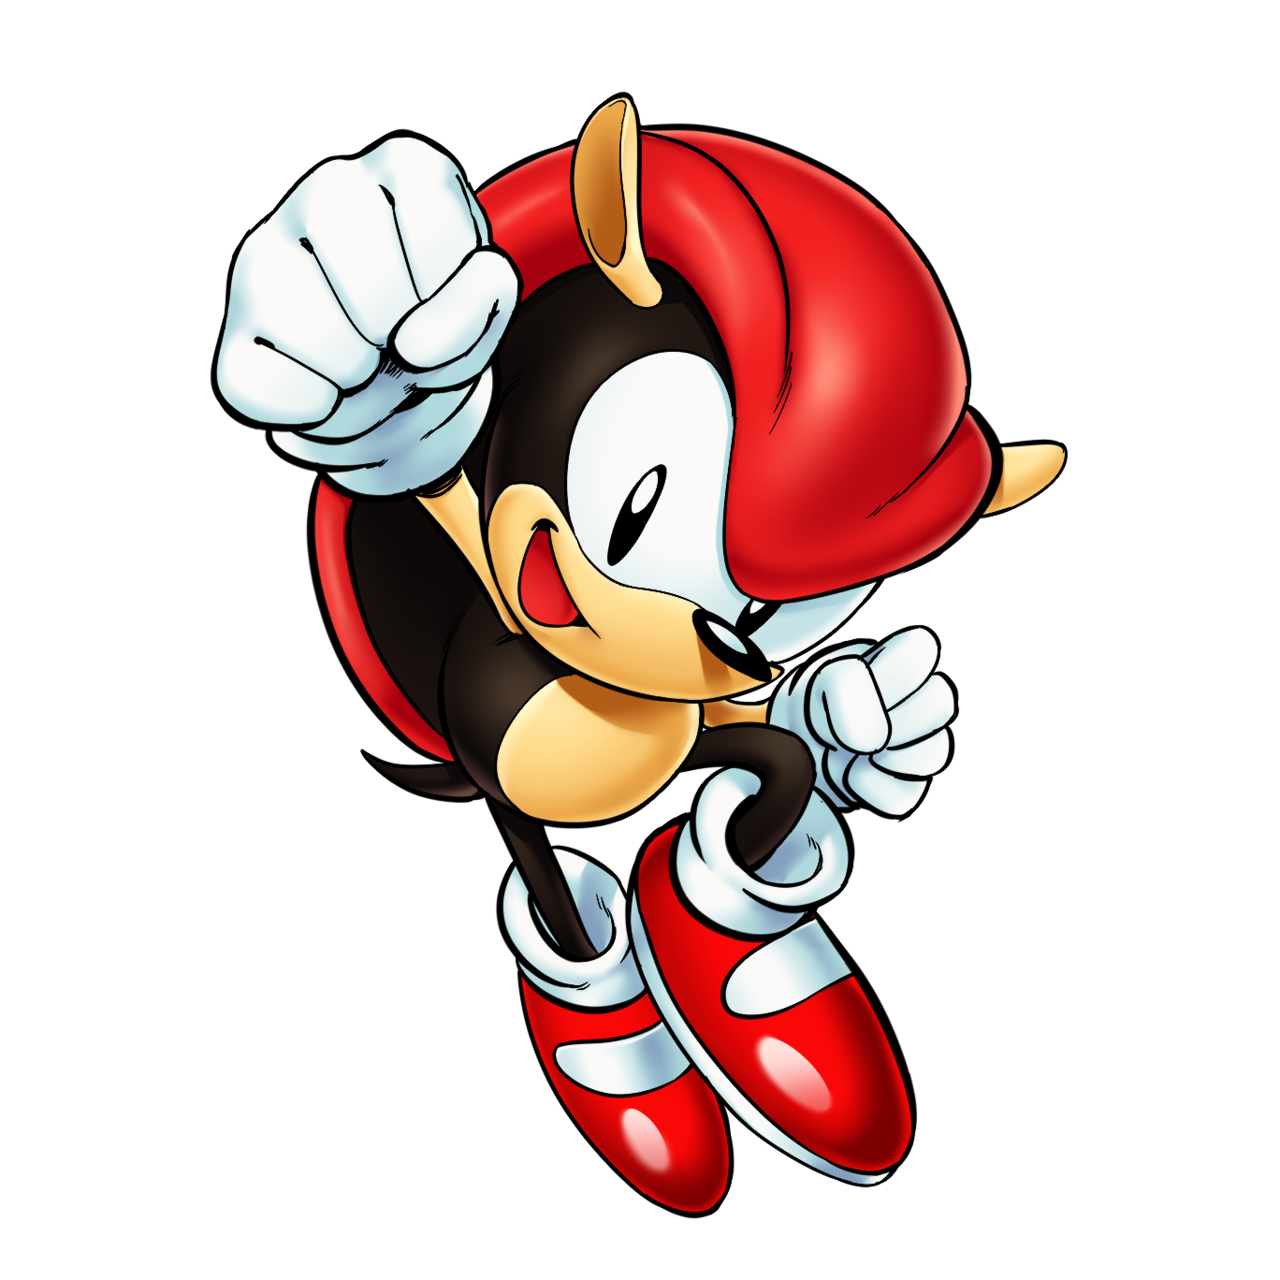 Mighty, Sonic EX Wiki